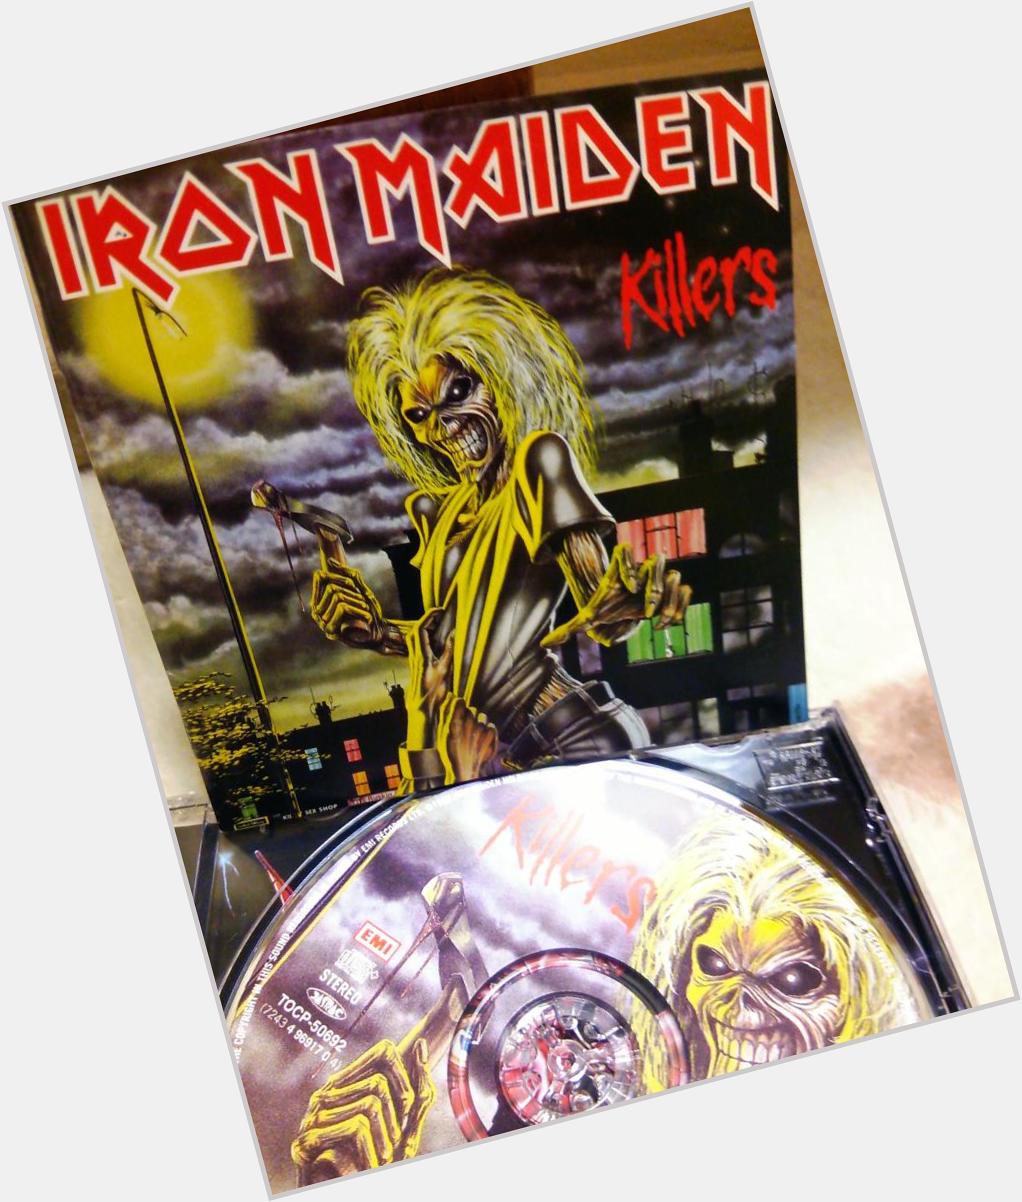 Happy Birthday!! Dave Murray Iron Maiden - Killers:  